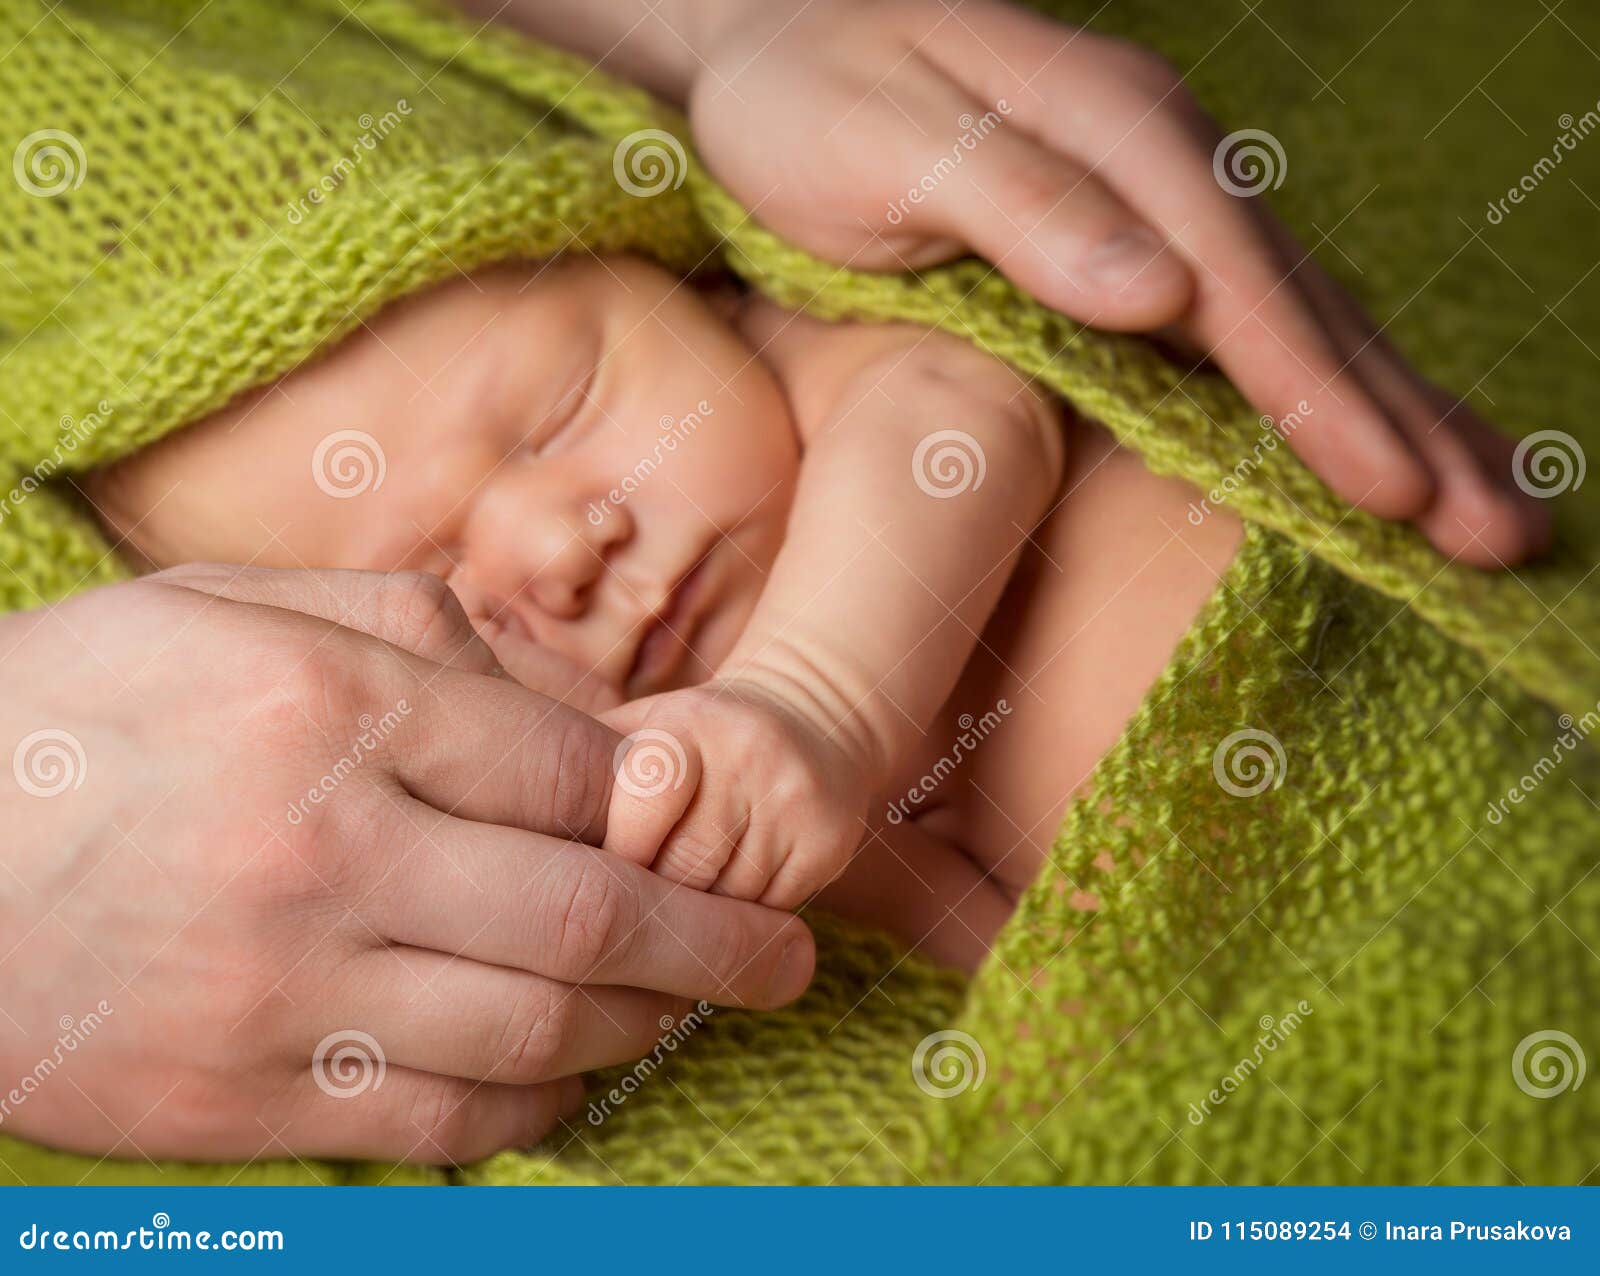 newborn baby sleeping in father hands, parent protecting new born child, one month child sleep under green woolen blanket